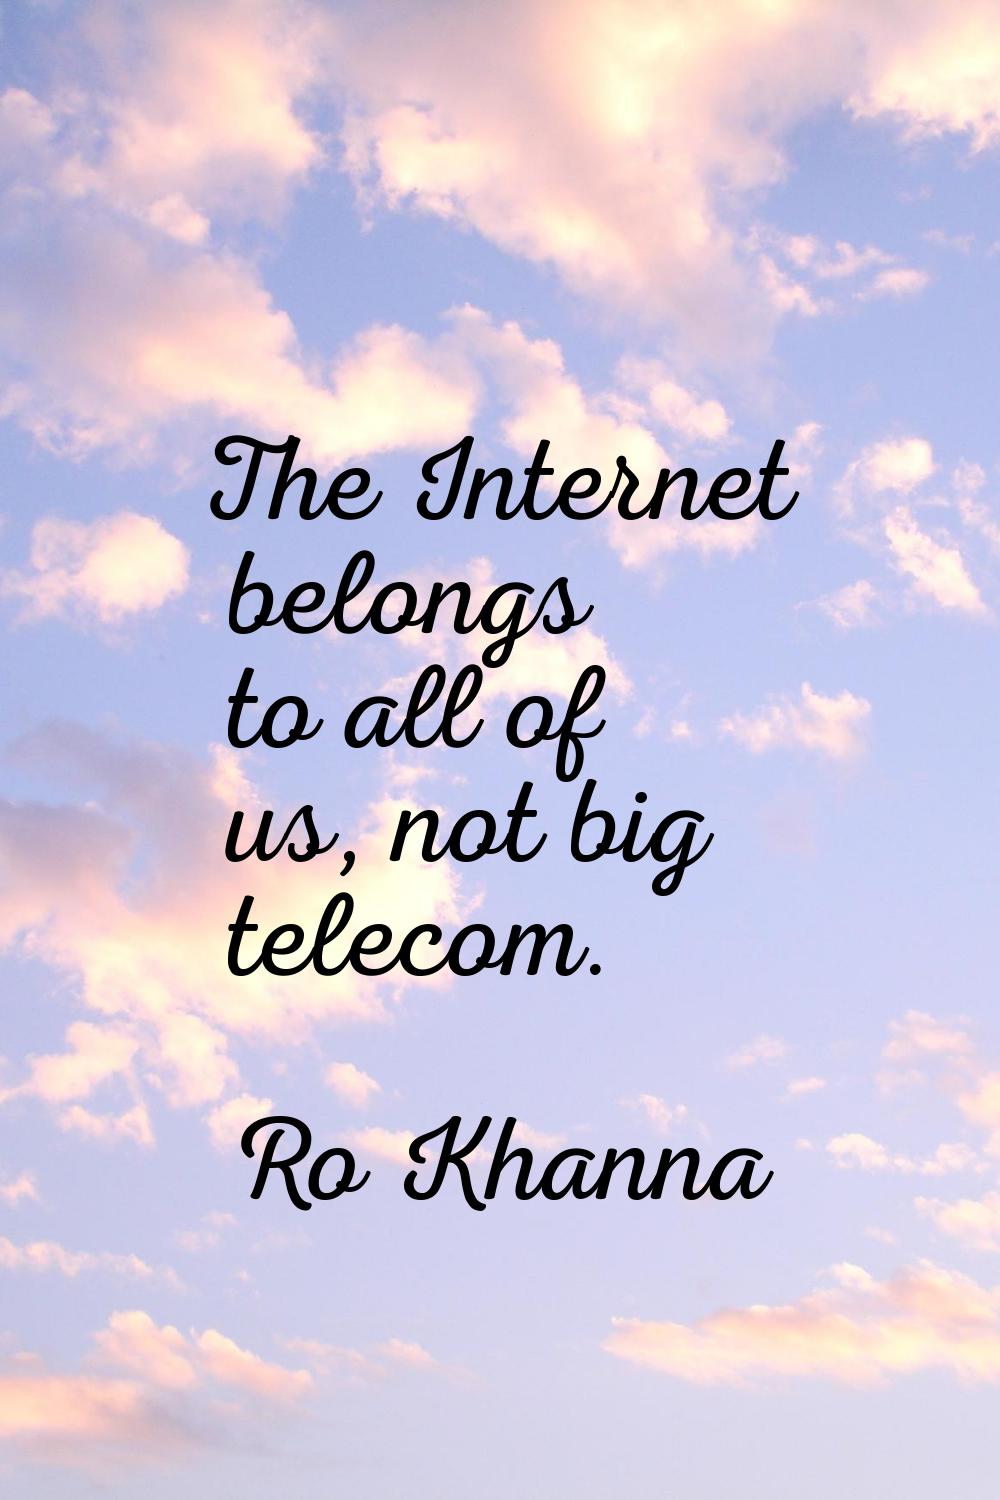 The Internet belongs to all of us, not big telecom.